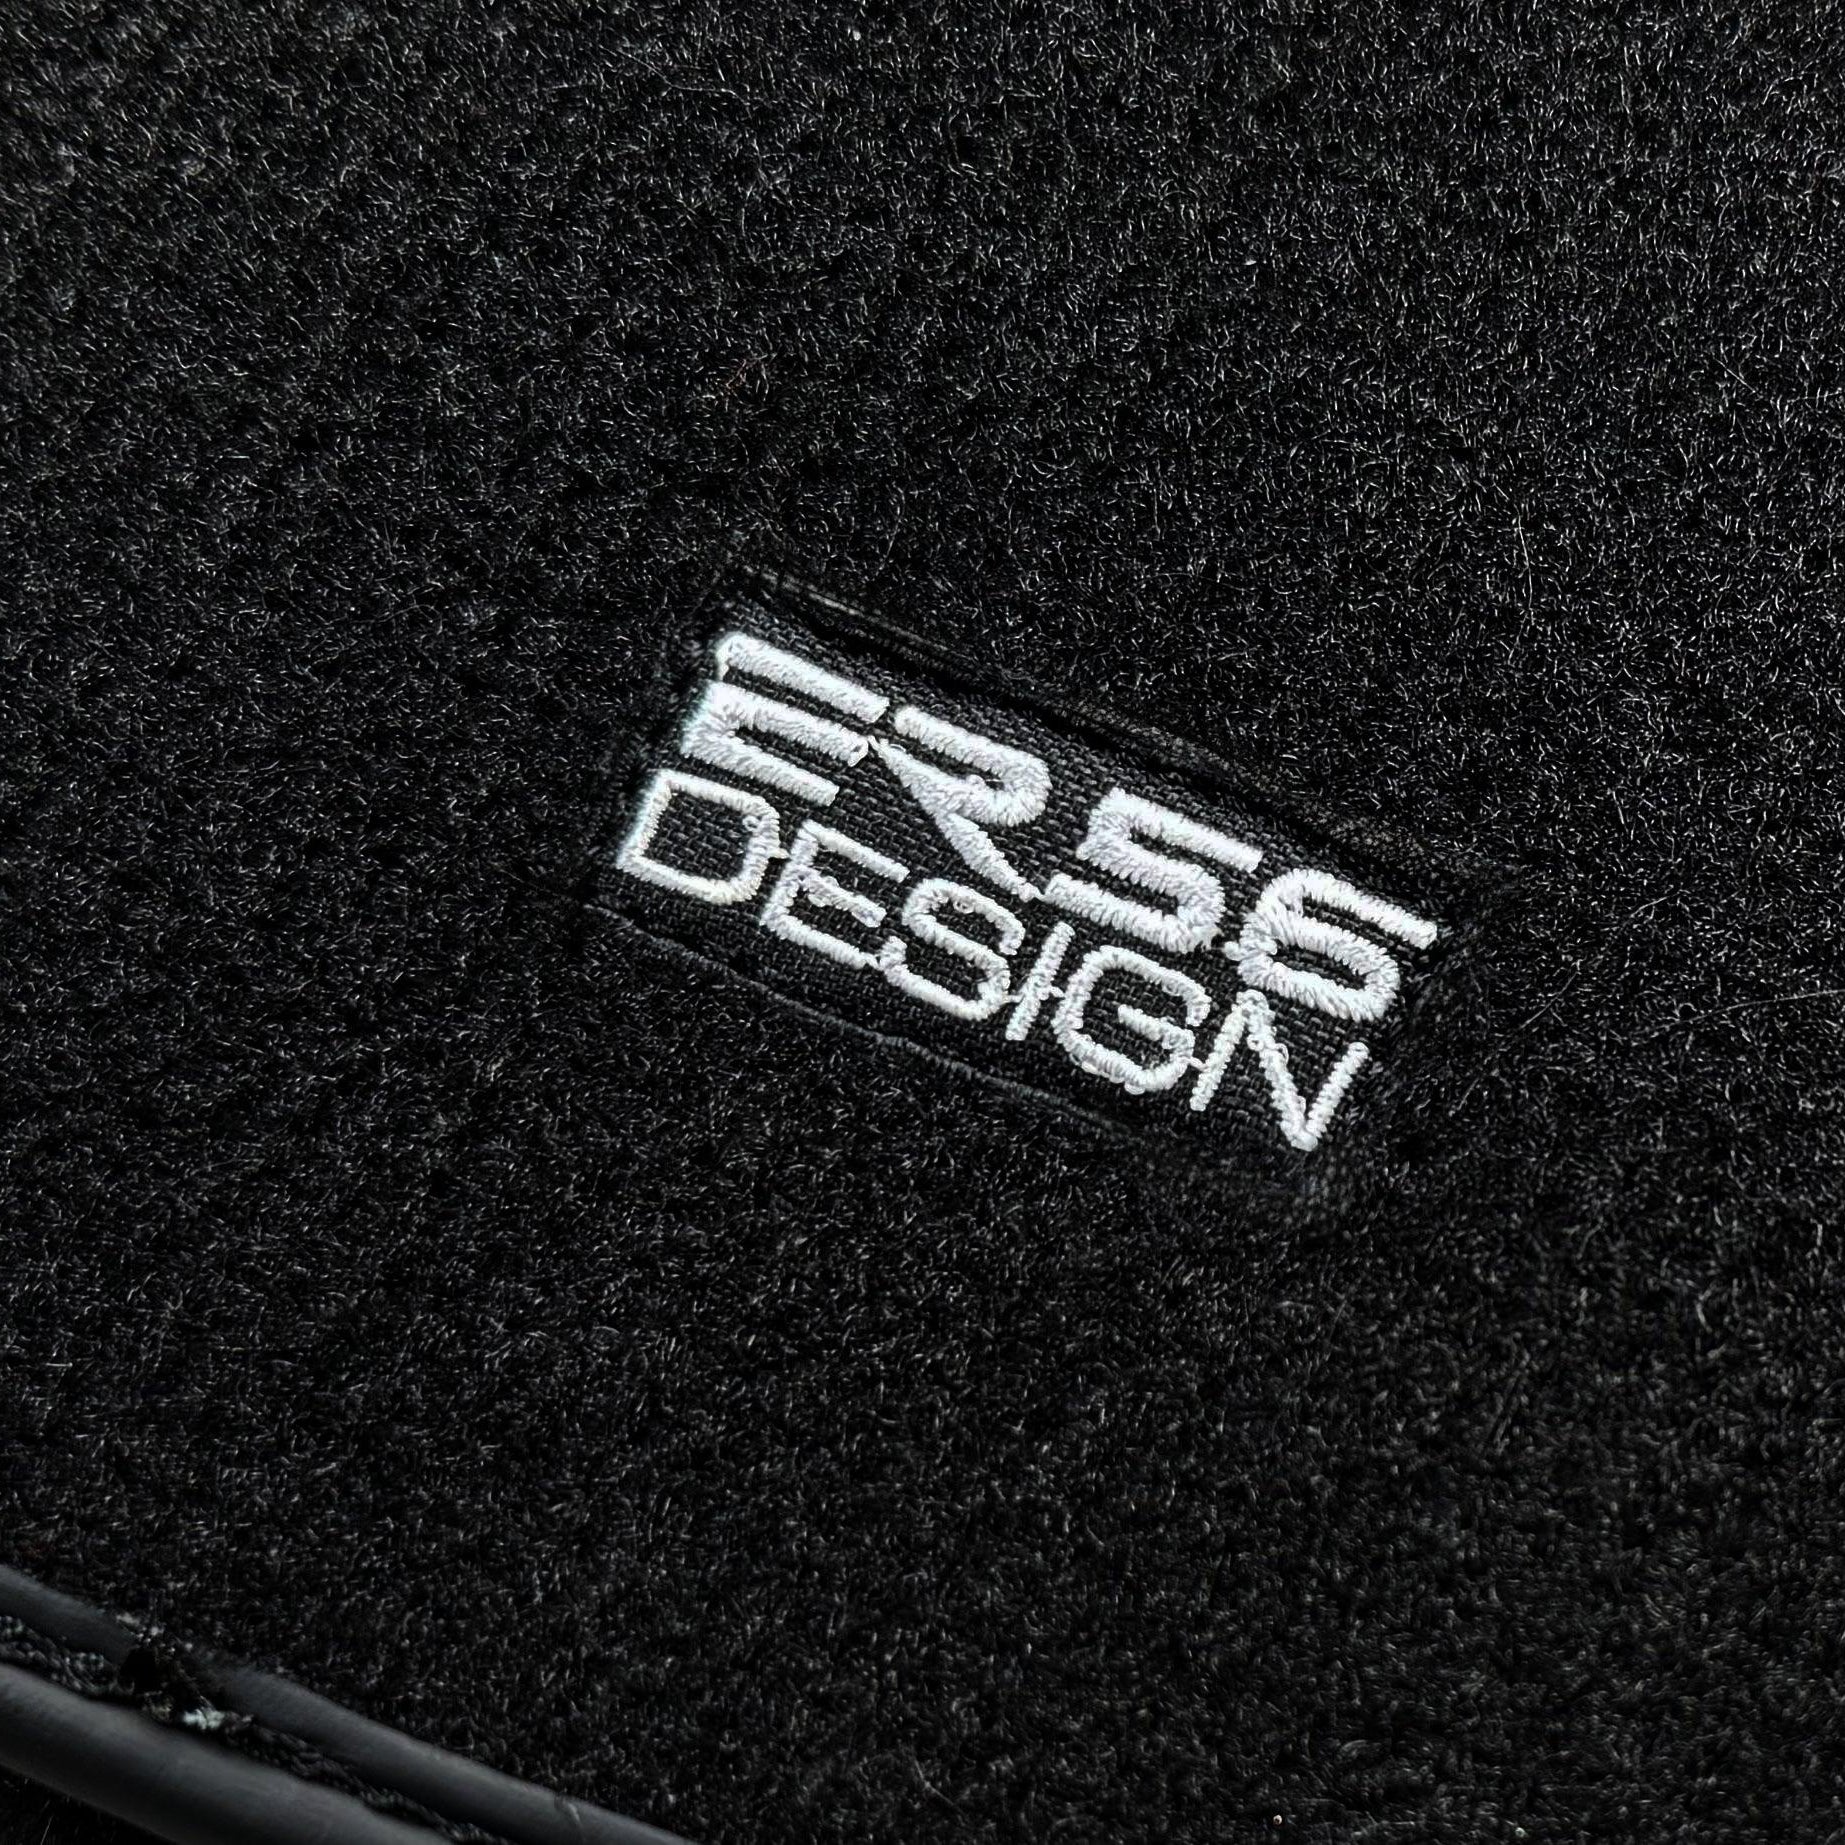 Black Sheepskin Floor Floor Mats For BMW X4 Series F26 ER56 Design